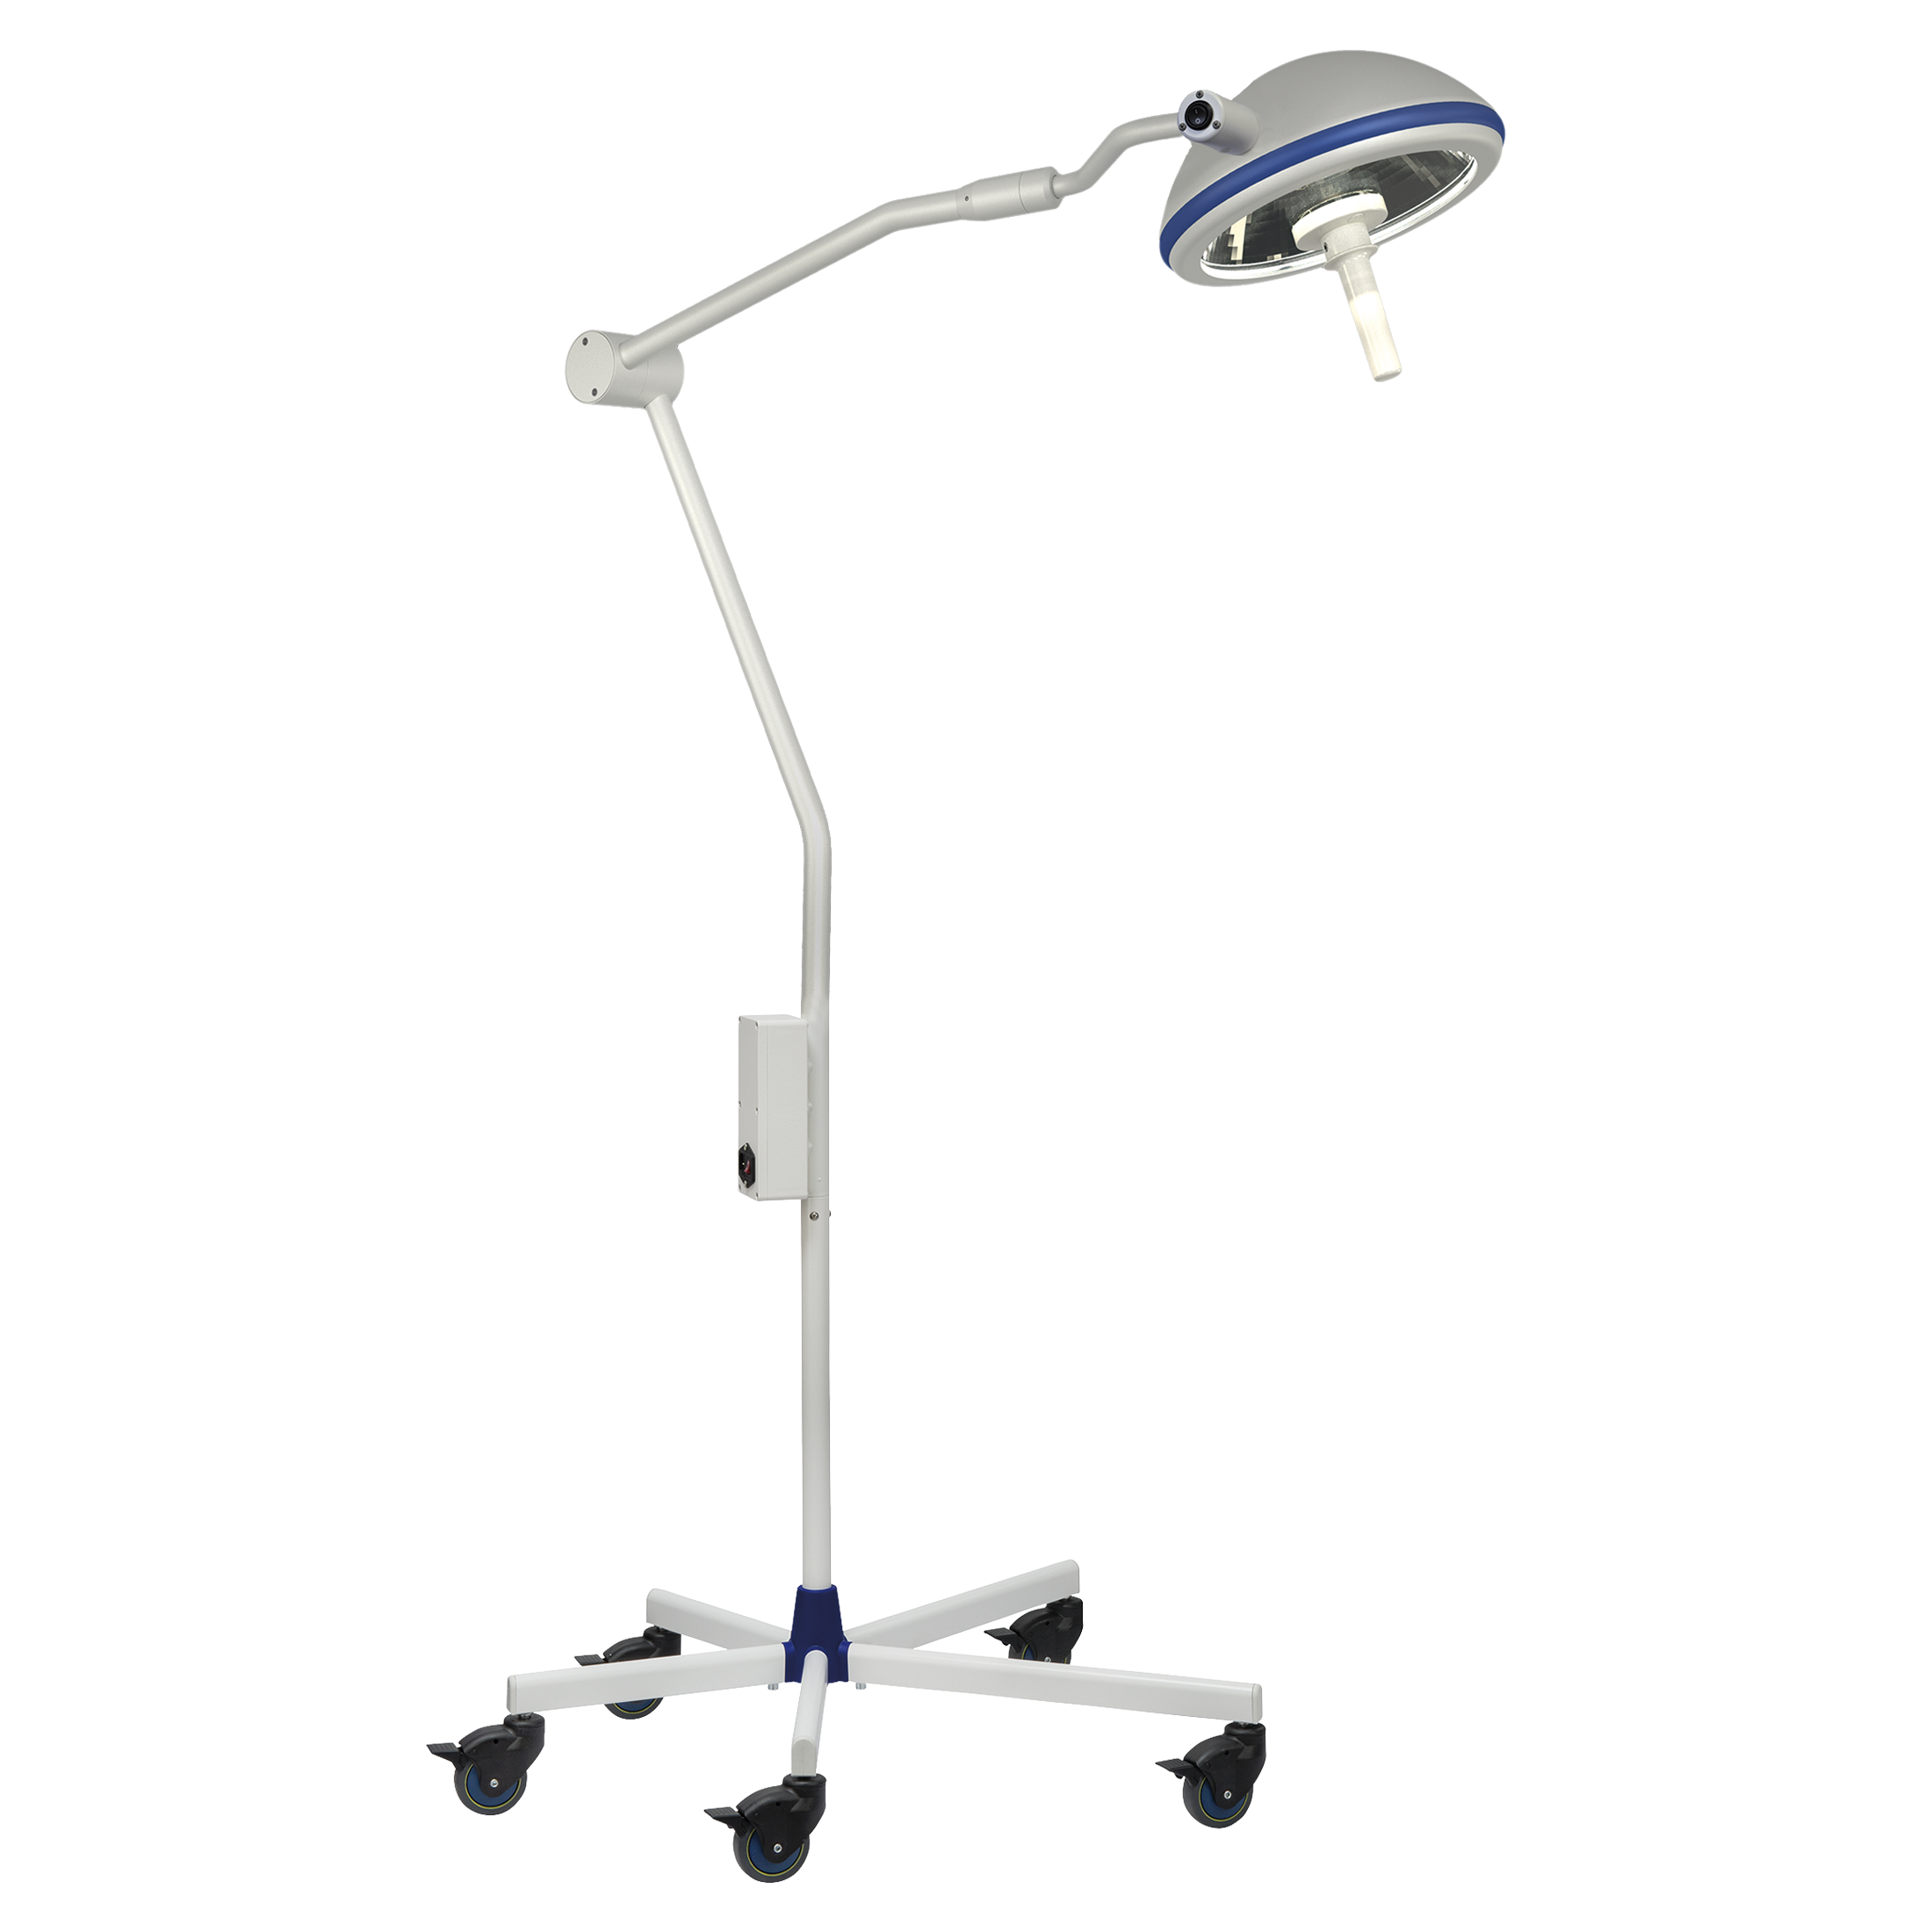 Series 5 - Mobile examination lamp